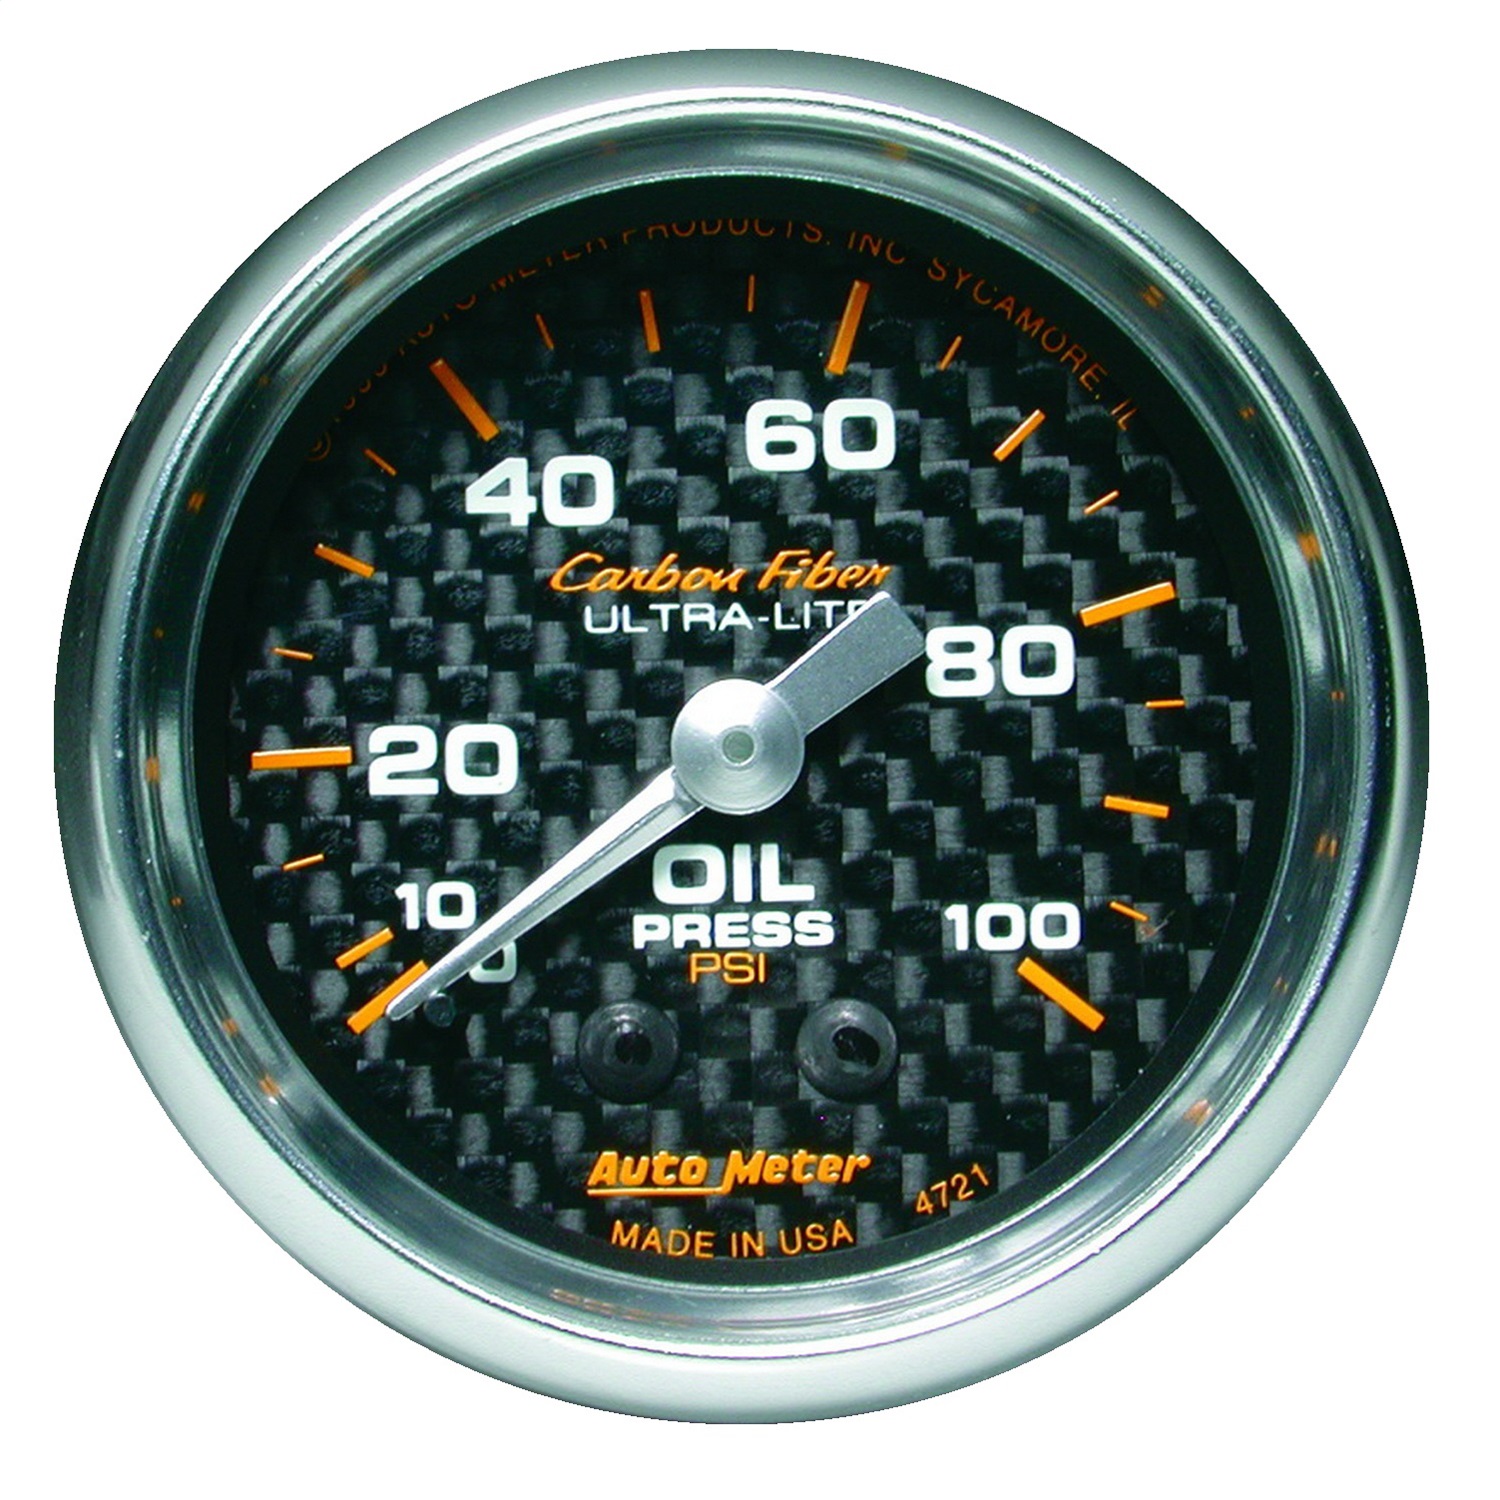 Auto Meter Auto Meter 4721 Carbon Fiber; Mechanical Oil Pressure Gauge